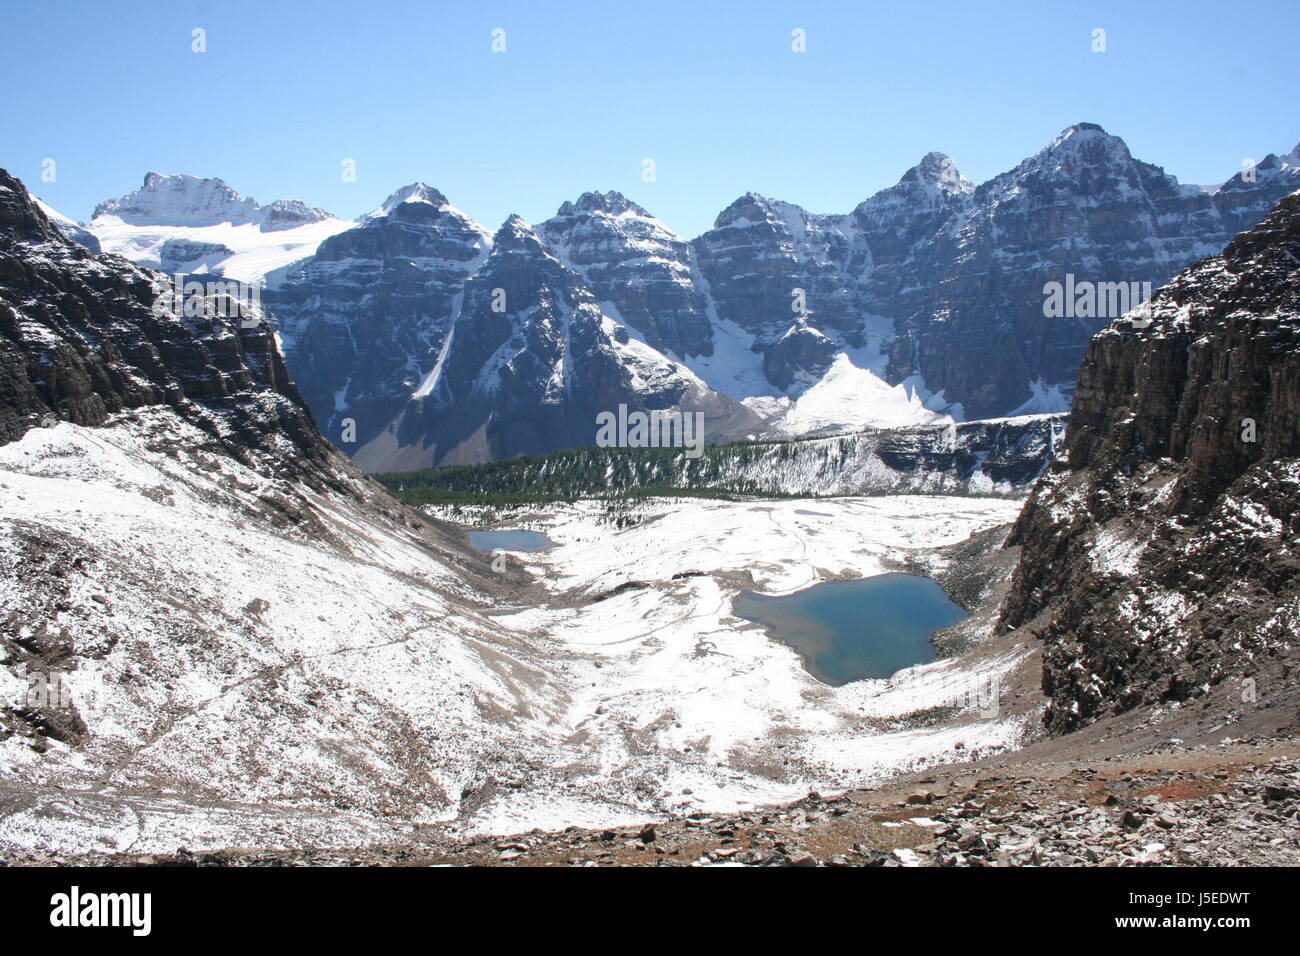 blue national park cold hike go hiking ramble summit blank european caucasian Stock Photo